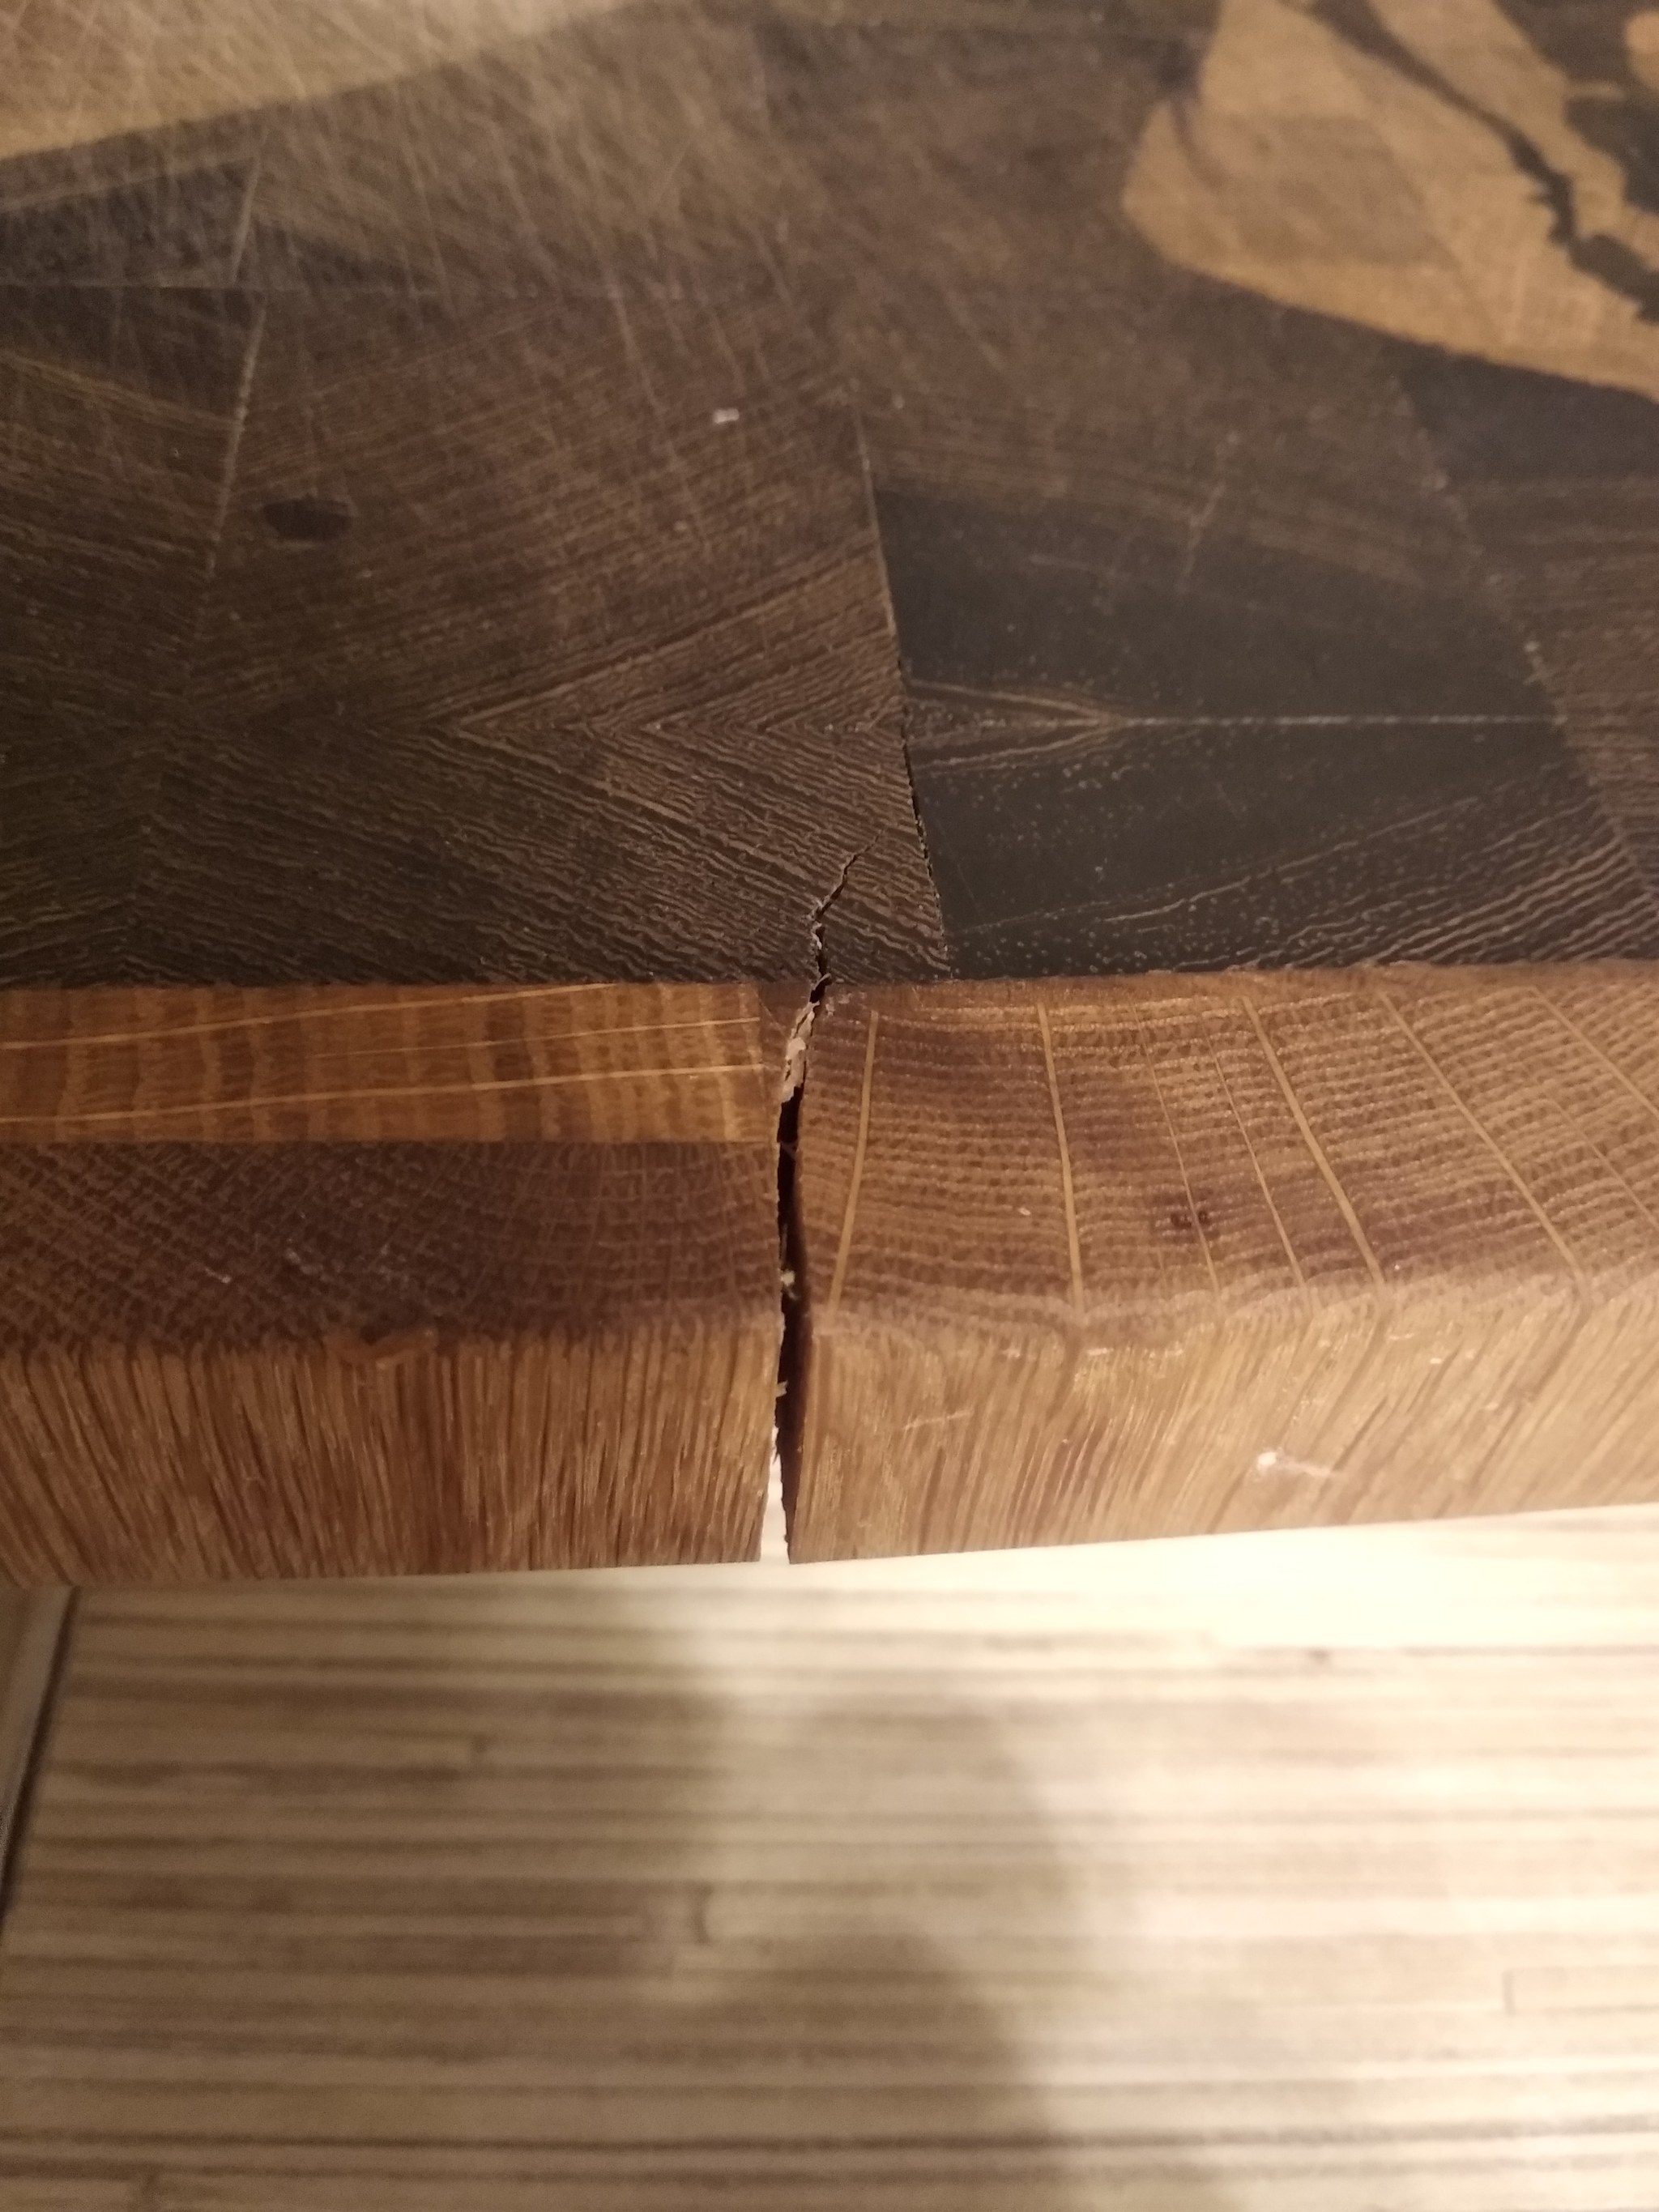 Cracked cutting board. - My, End board, Breaking, Help, Longpost, Need advice